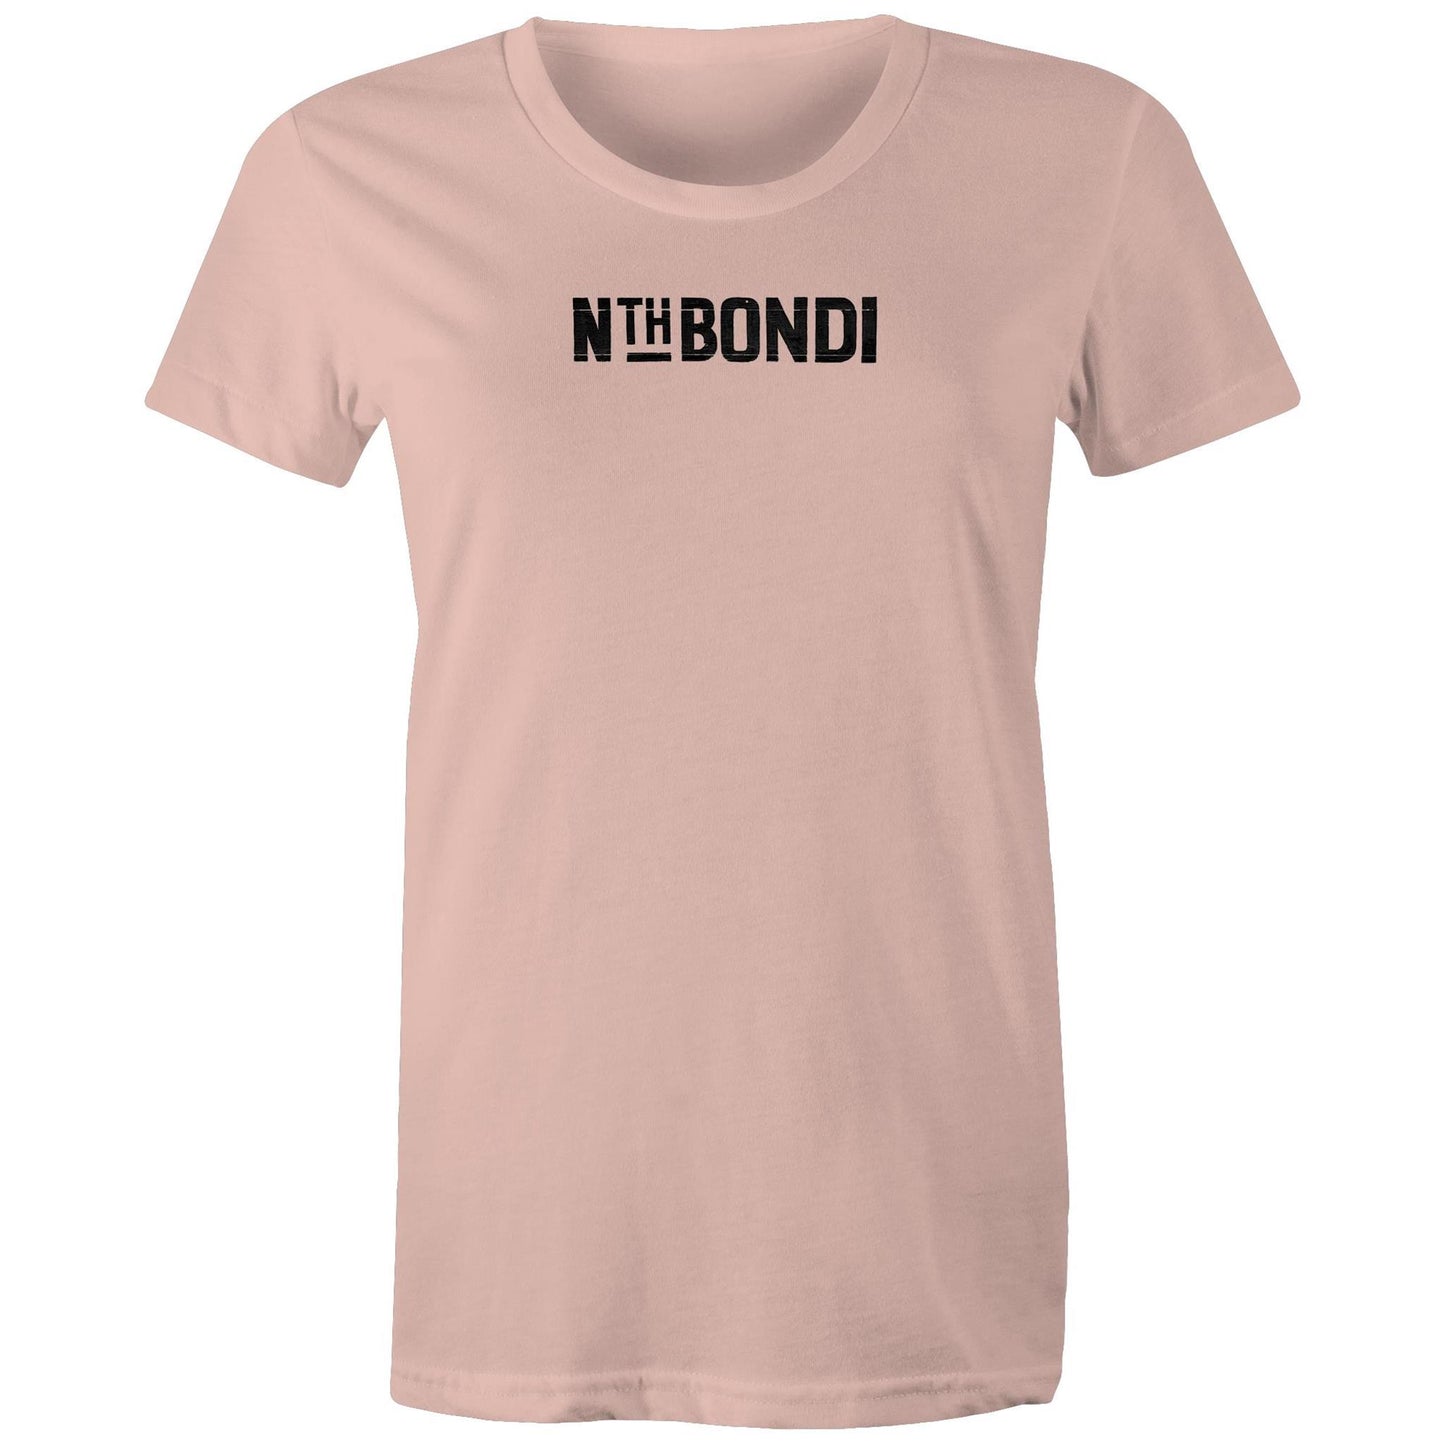 Nth BONDI T Shirts for Women